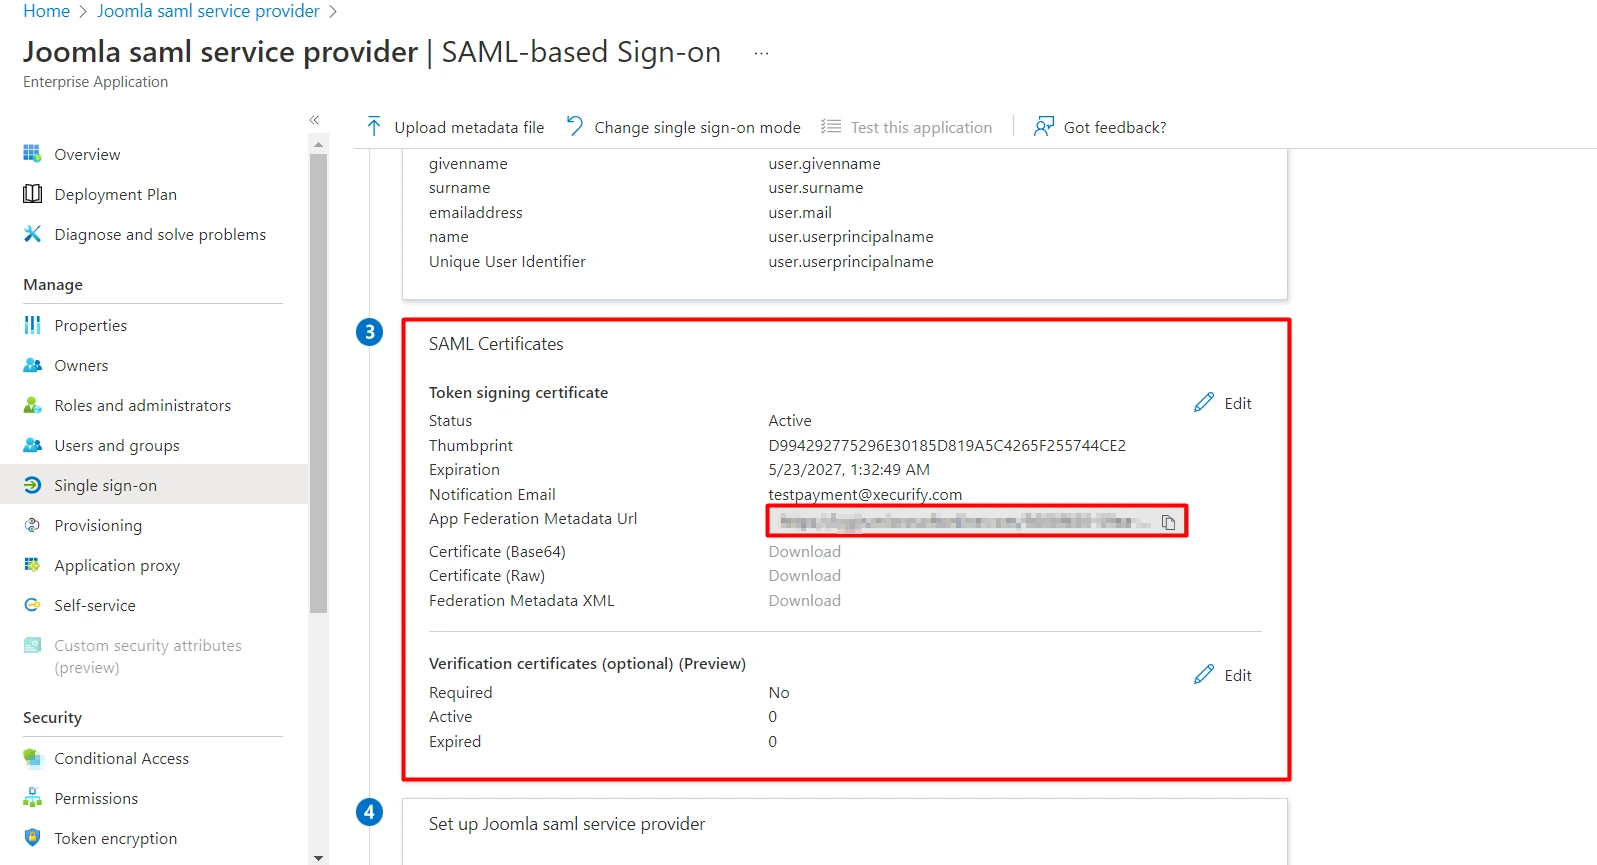 Azure AD SAML Single Sign-On SSO into Joomla, Azure Active Directory SSO- App Federation Metadata Url